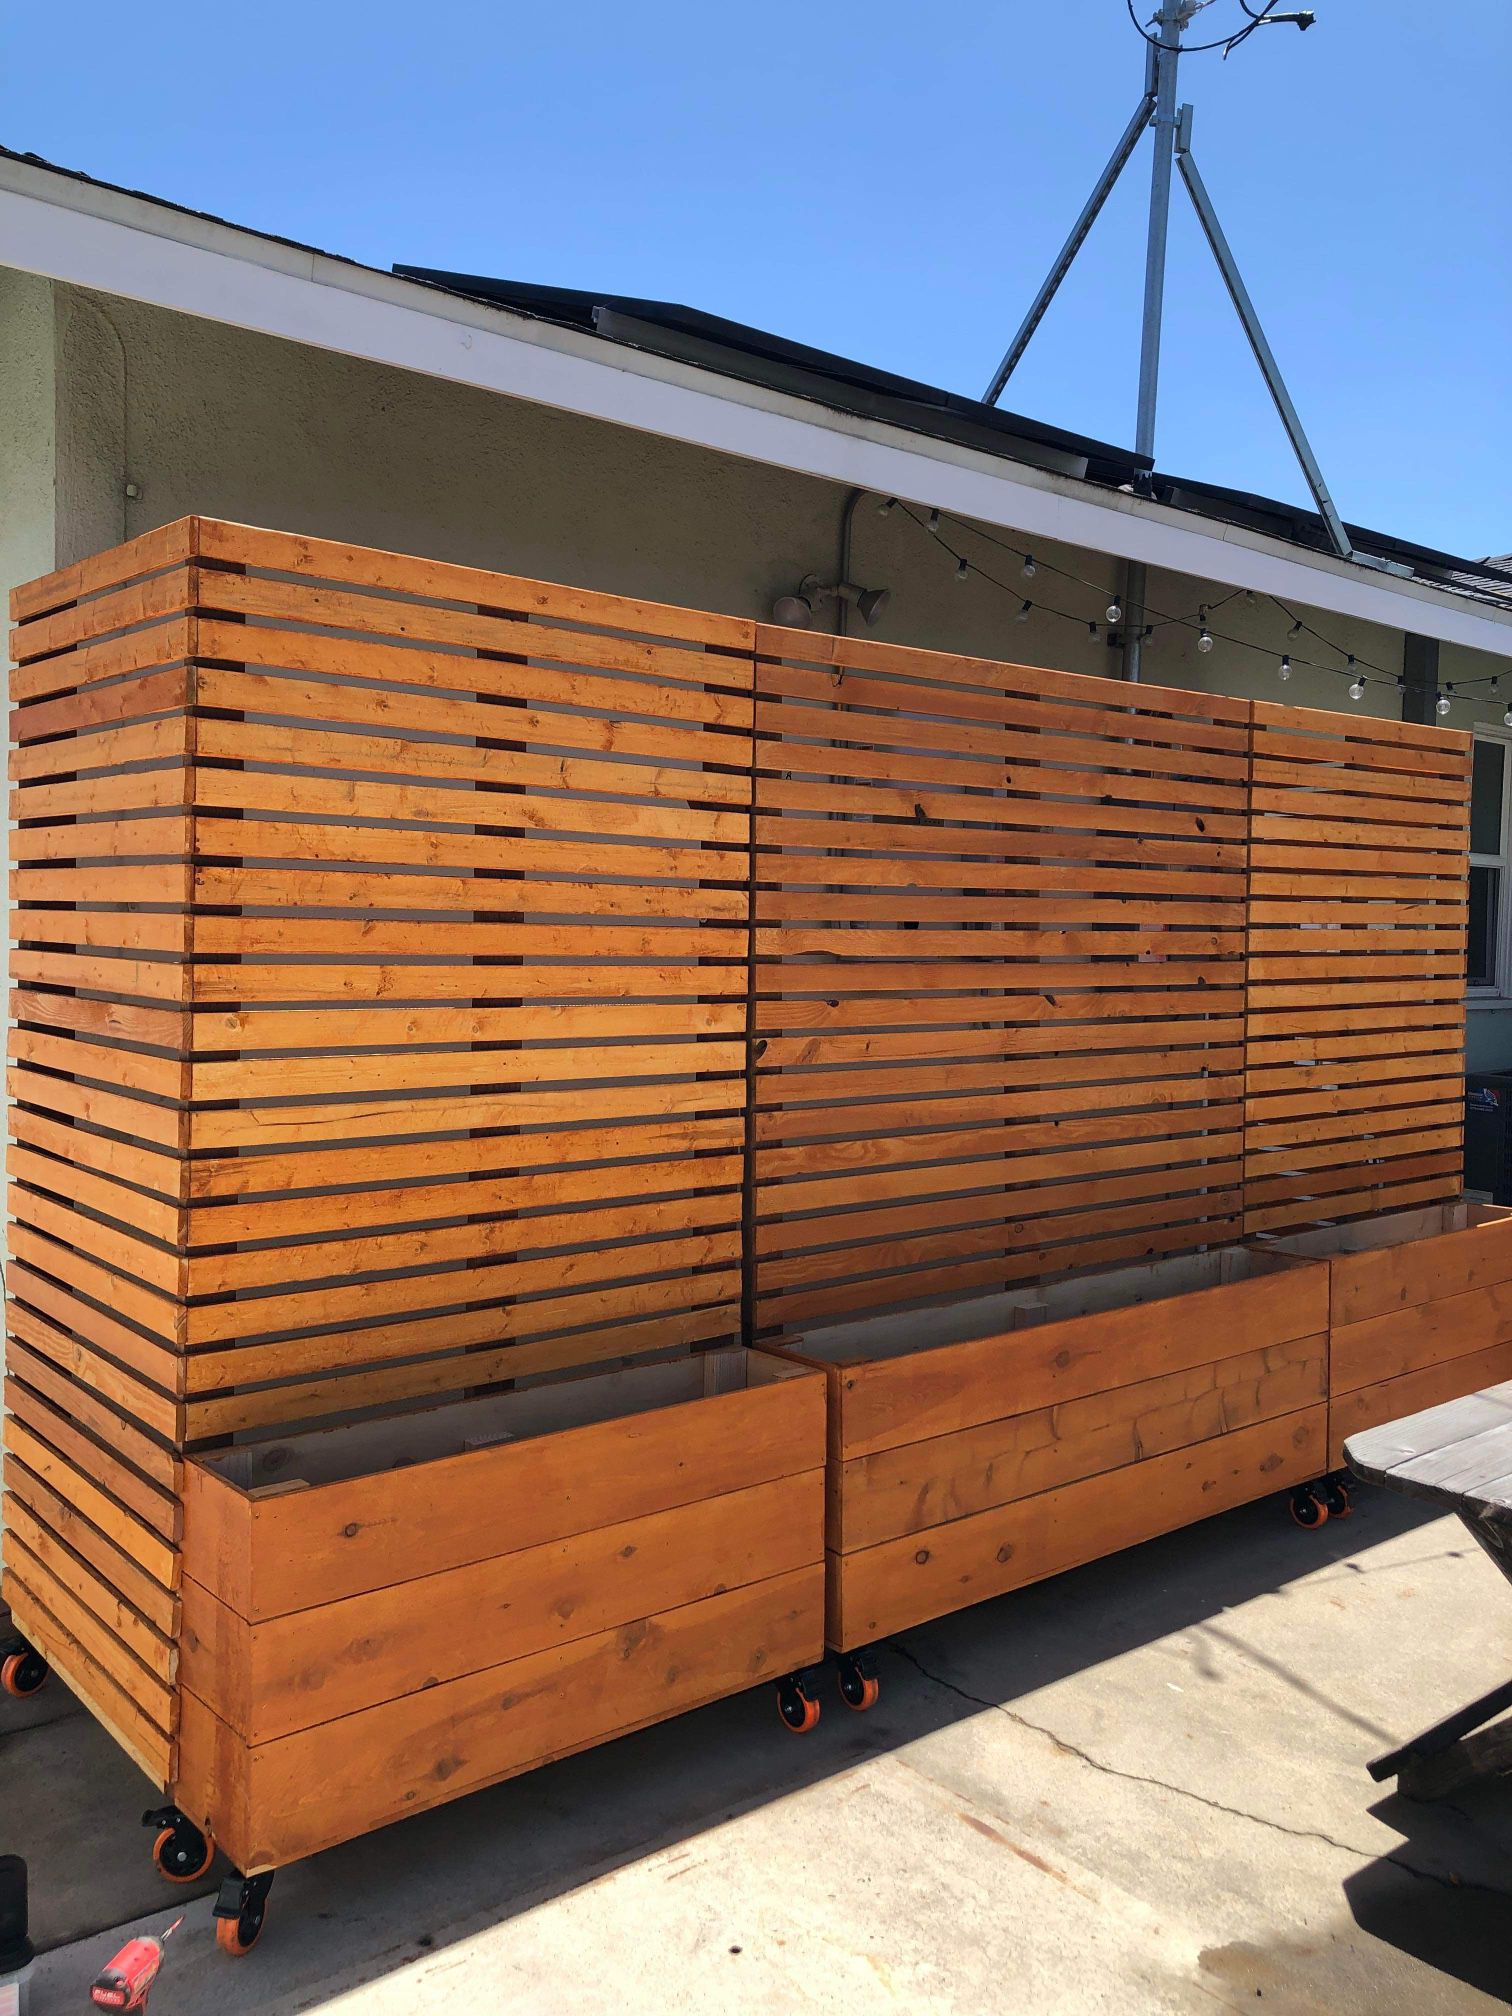 Redwood Cedar garden bed planter boxes raised elevated 3 4 5ft long wheels casters custom made vege